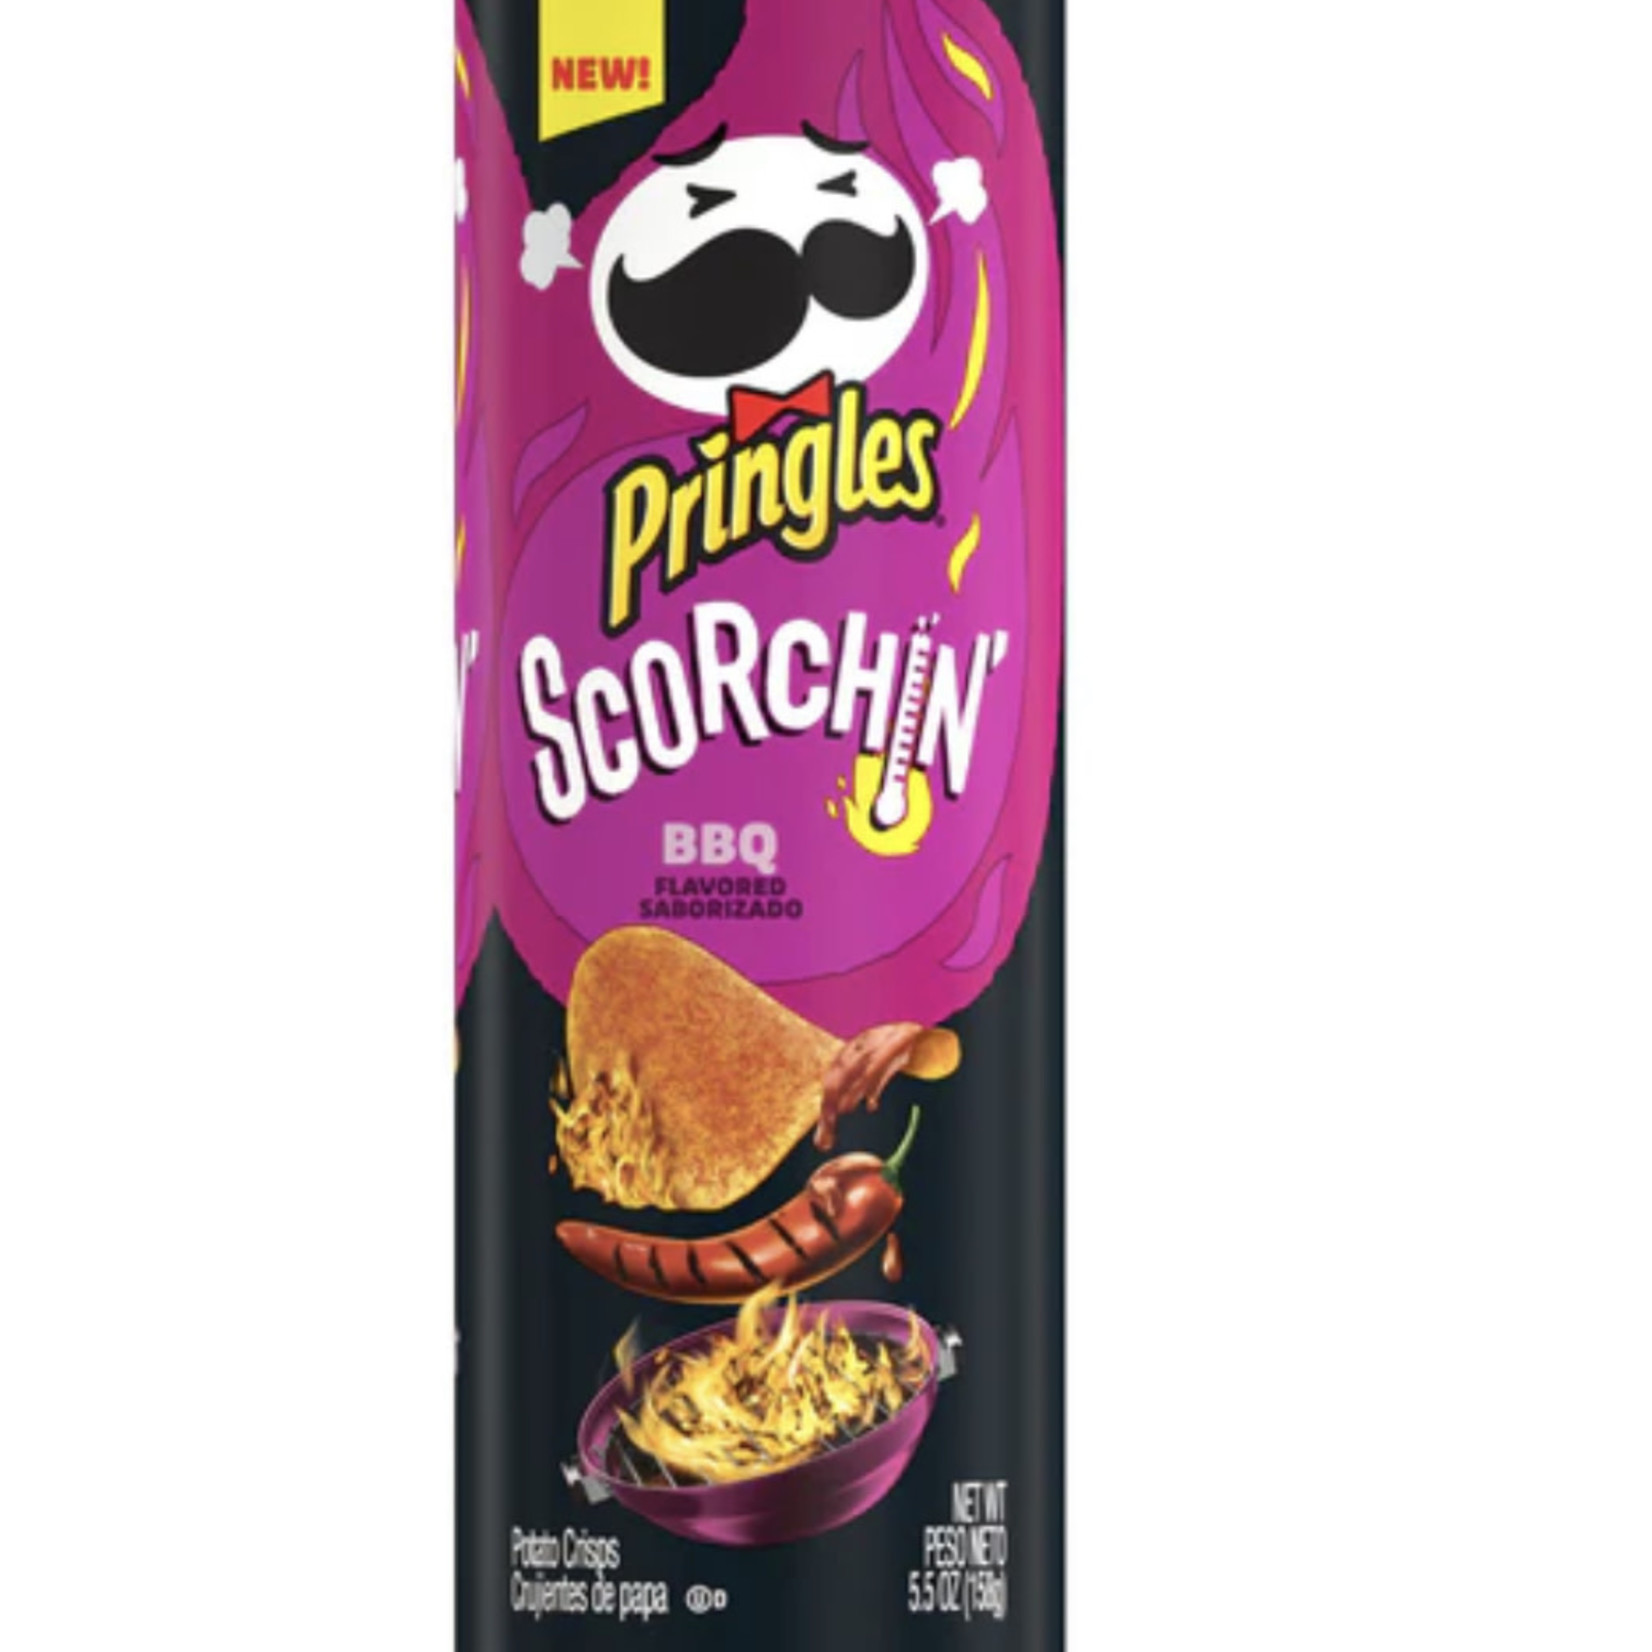 Pringles Scorchin - BBQ